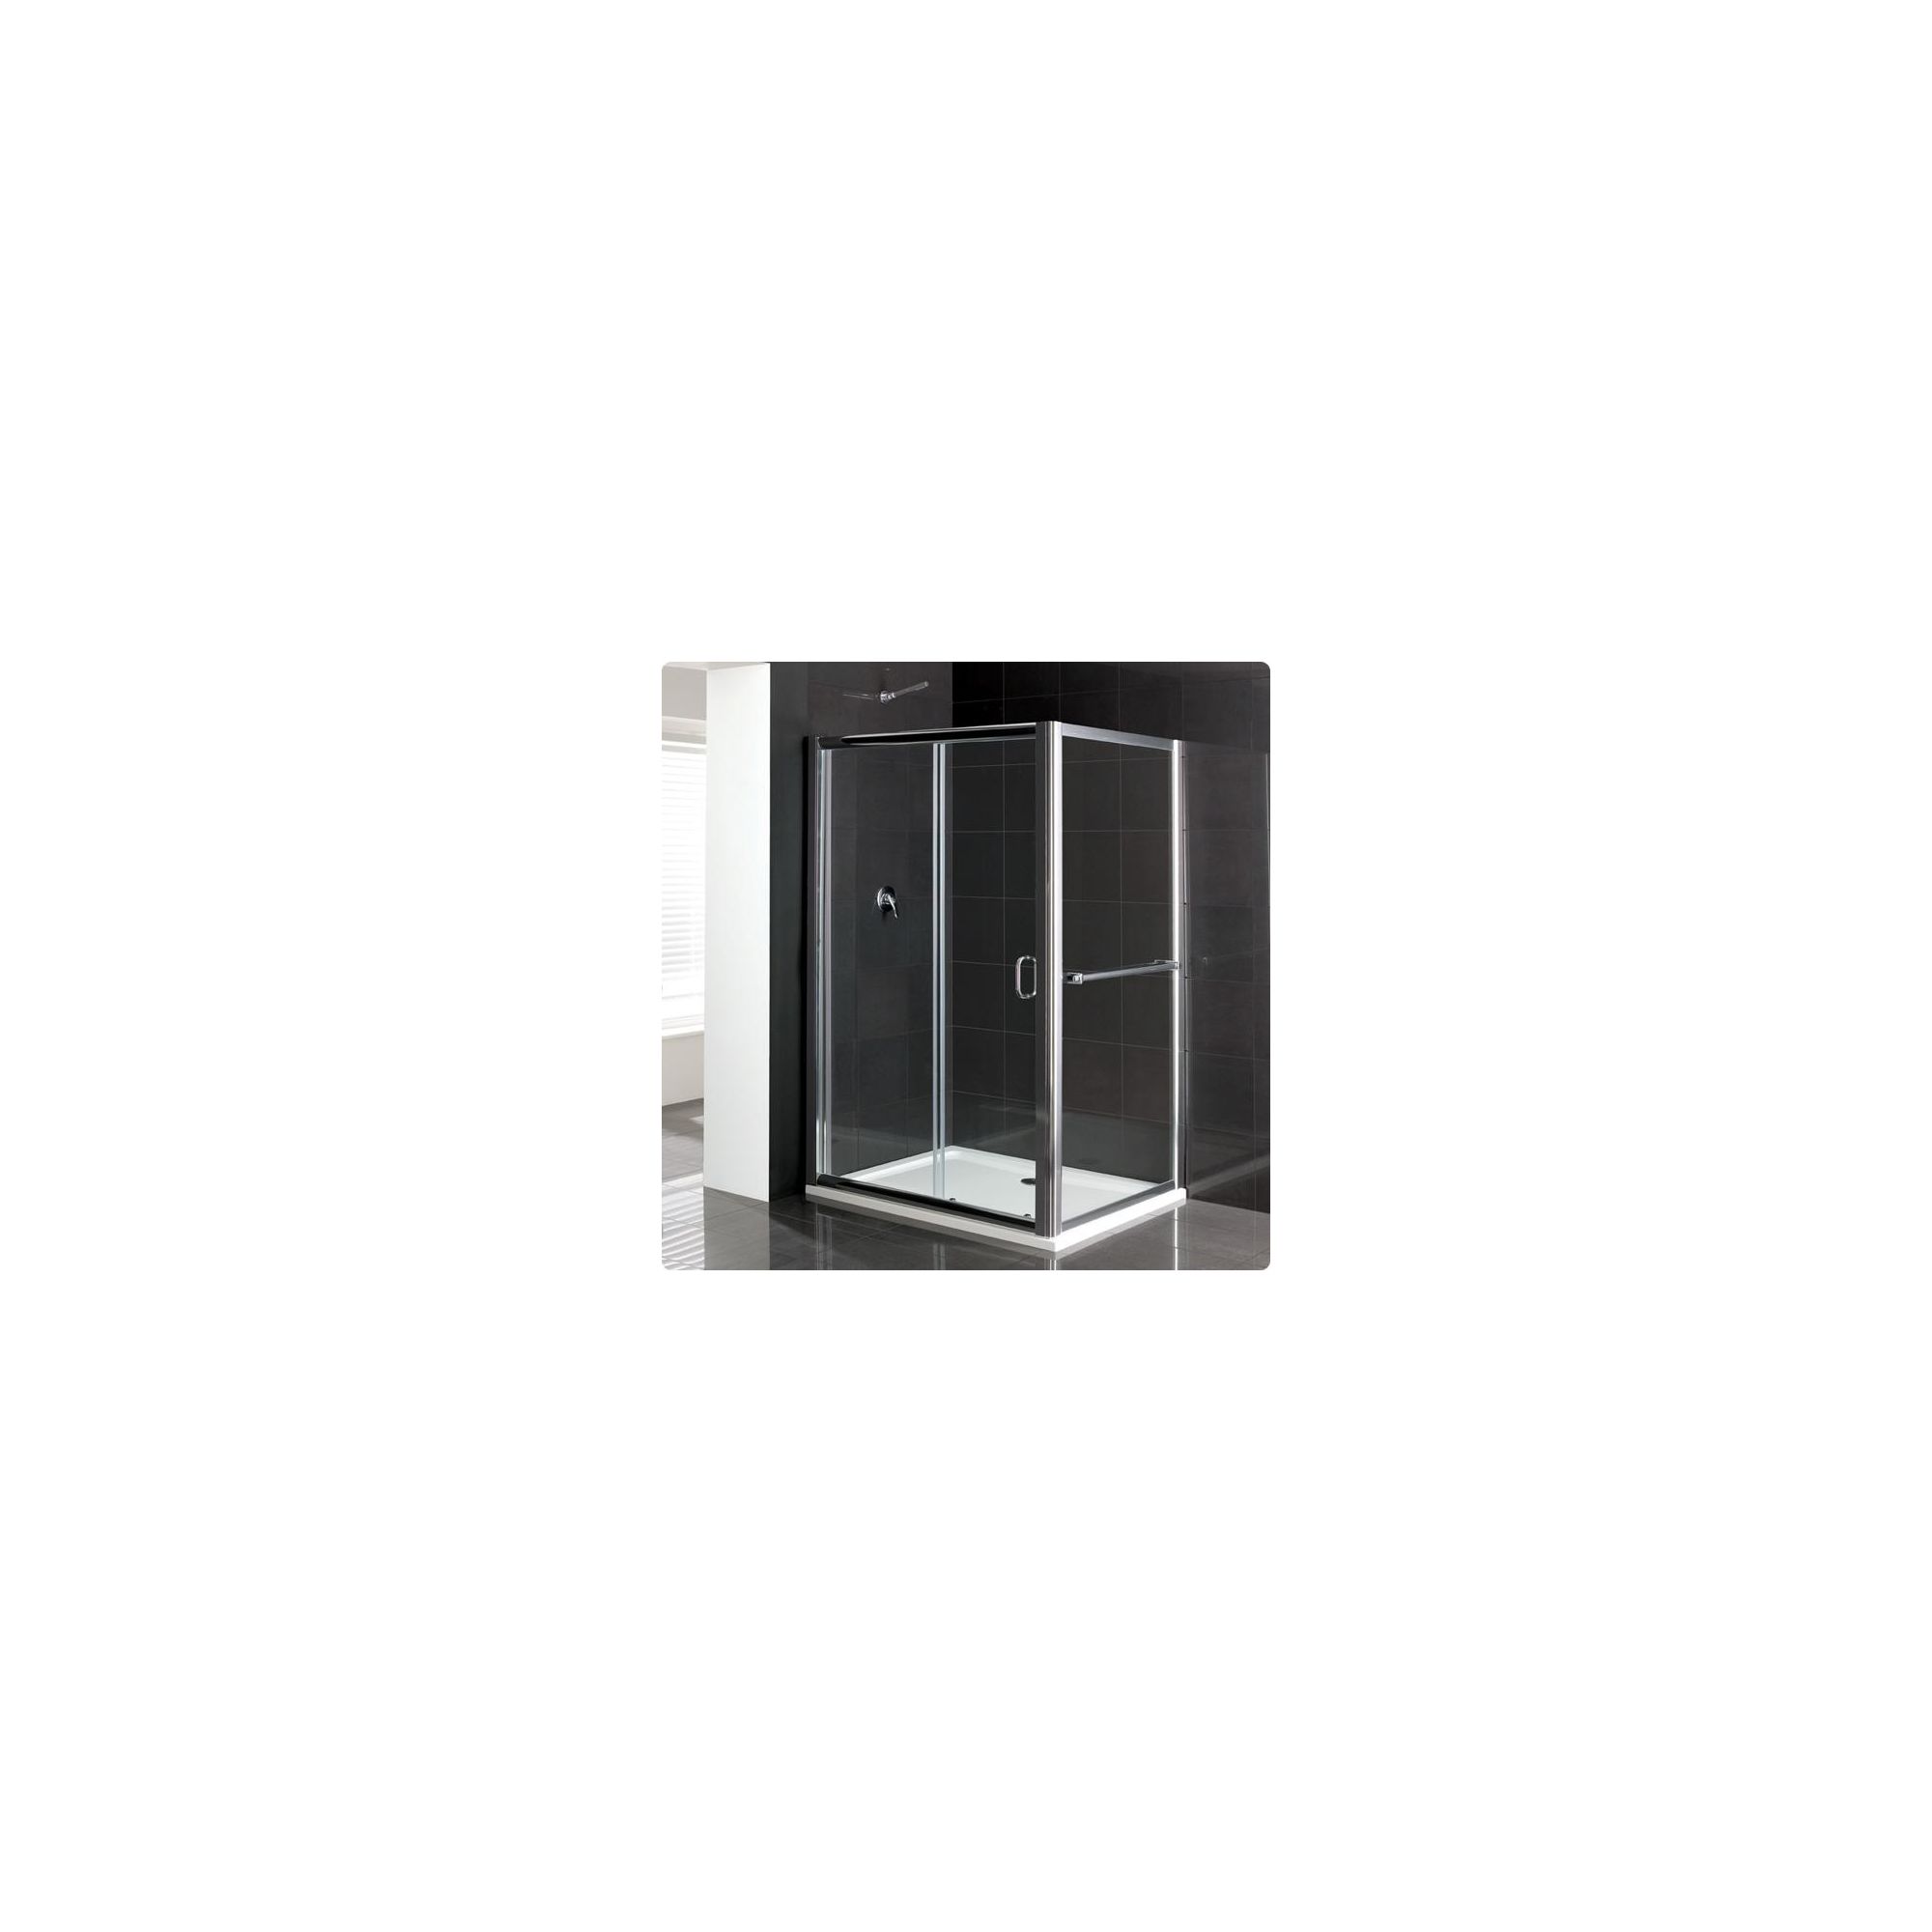 Duchy Elite Silver Sliding Door Shower Enclosure, 1000mm x 900mm, Standard Tray, 6mm Glass at Tesco Direct